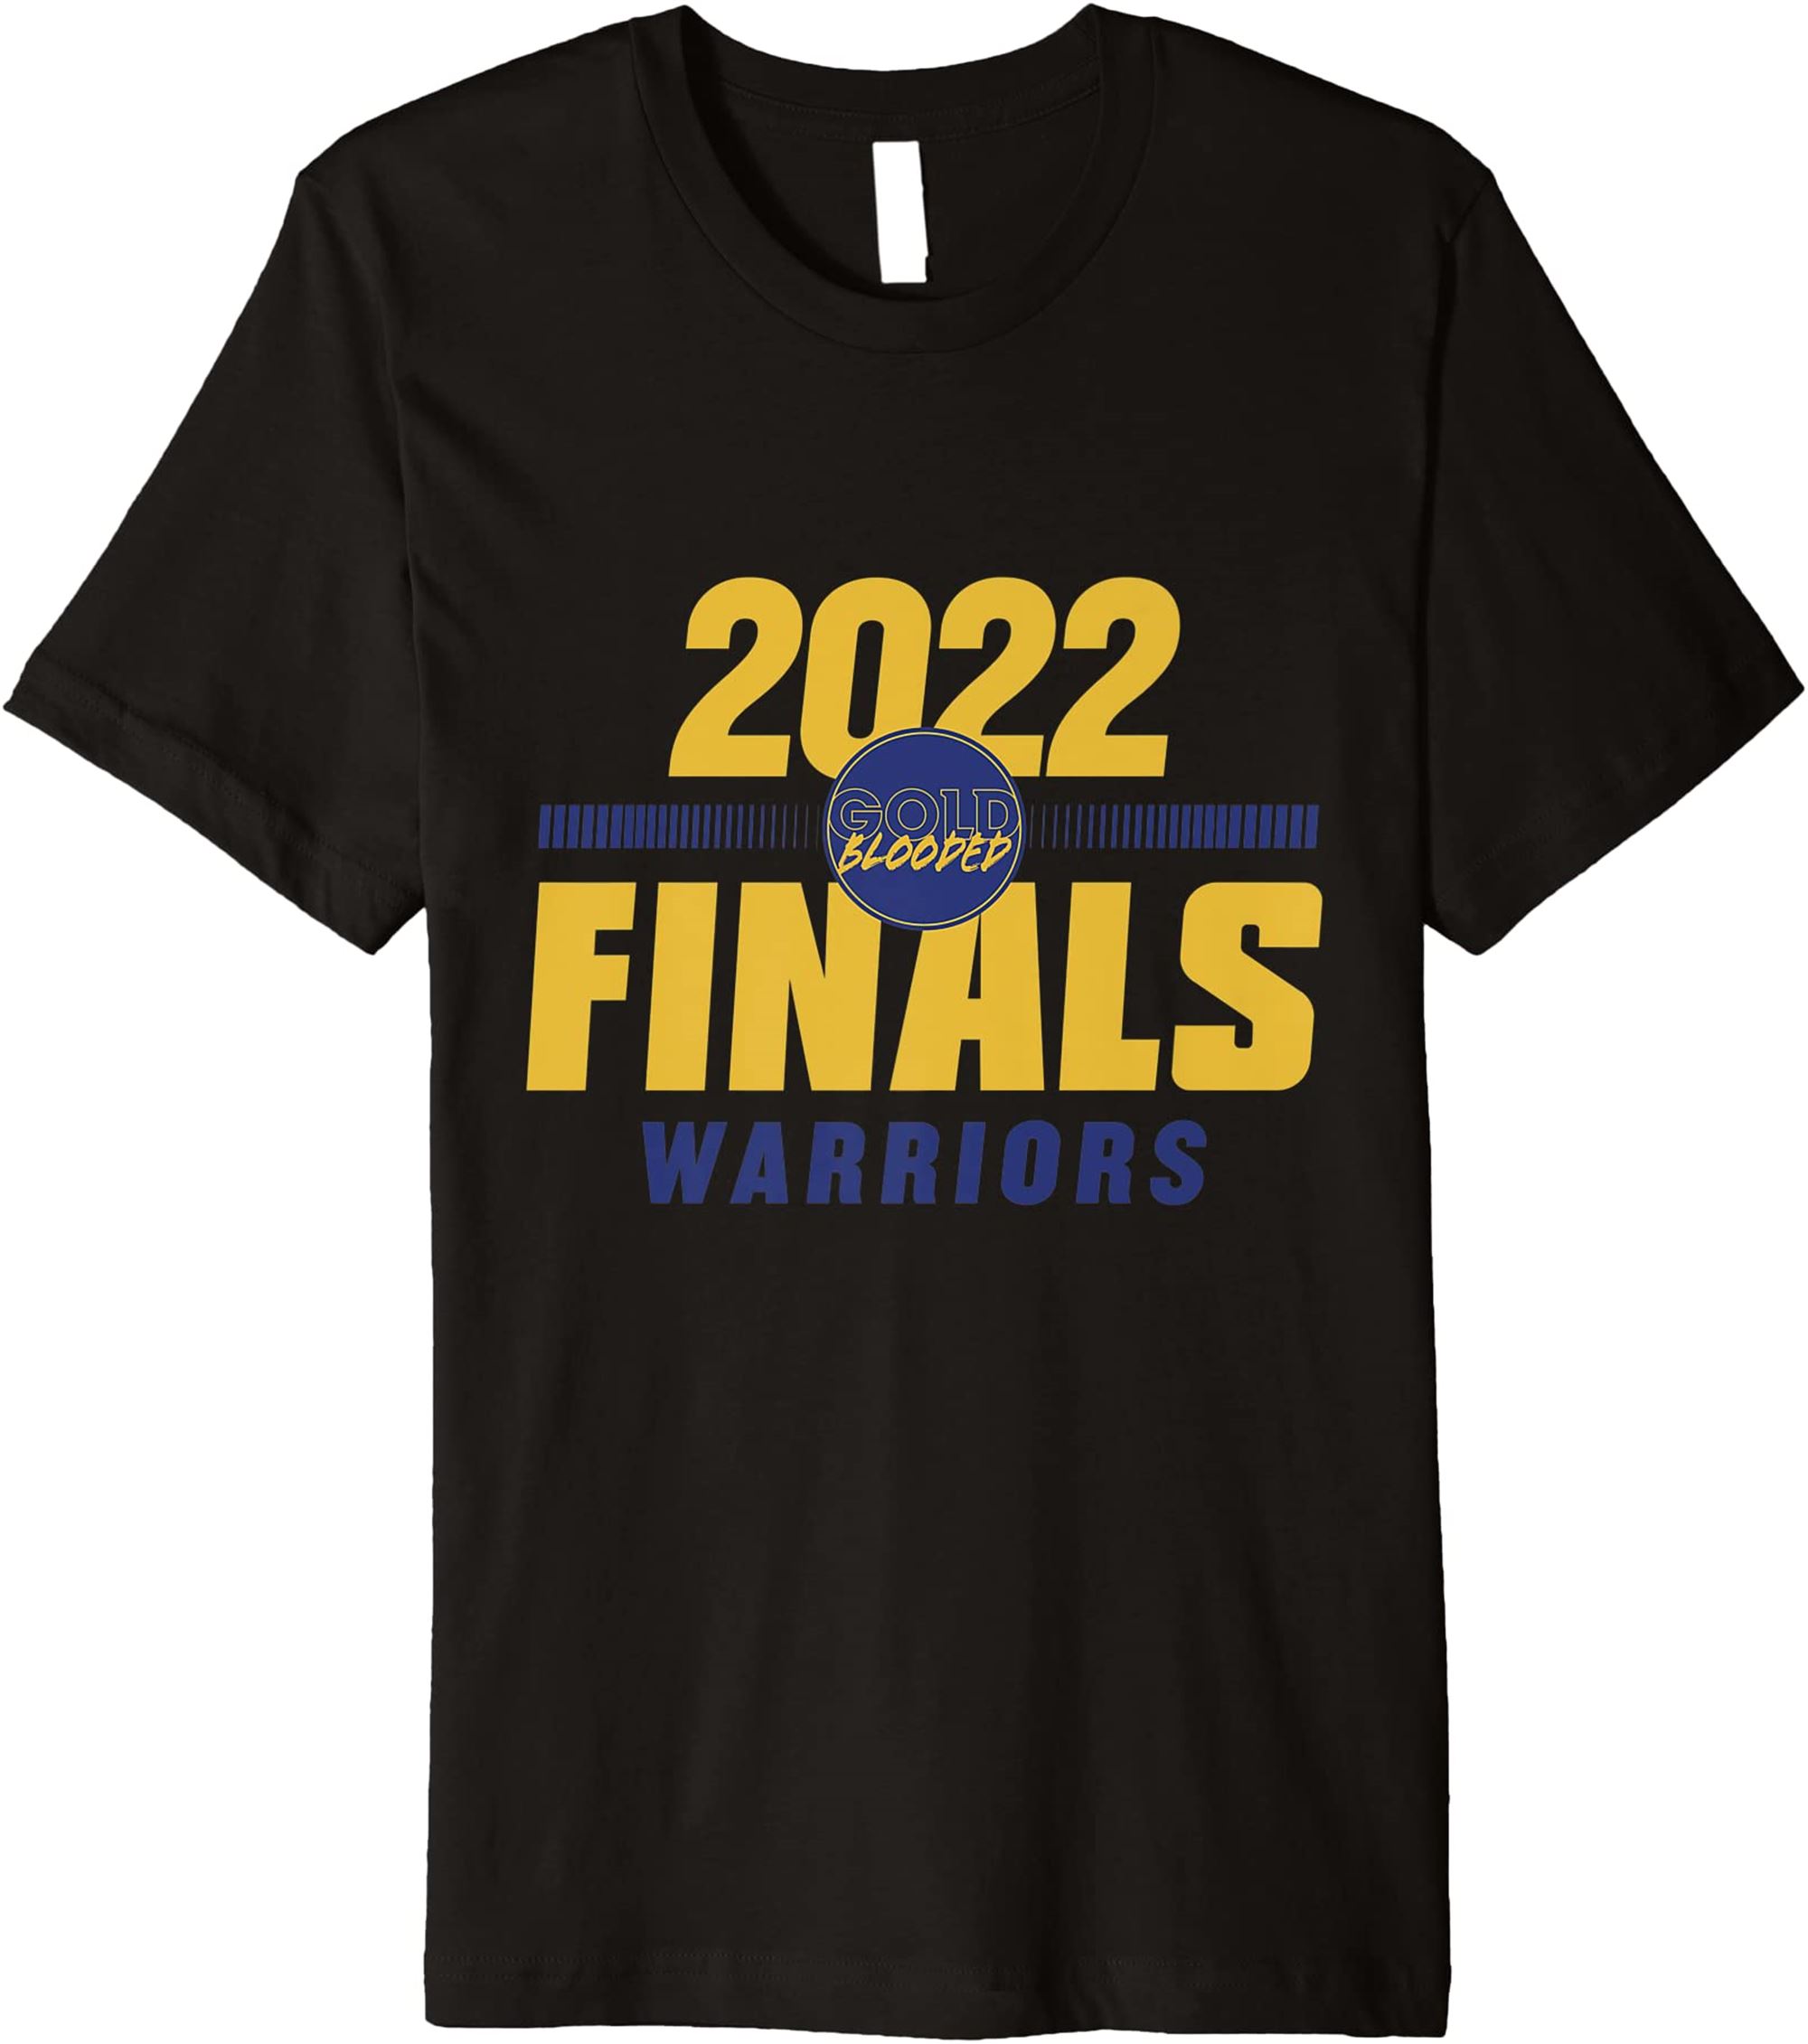 Warriors Finals 2022 Basketball Premium T-shirt Full Size Up To 5xl